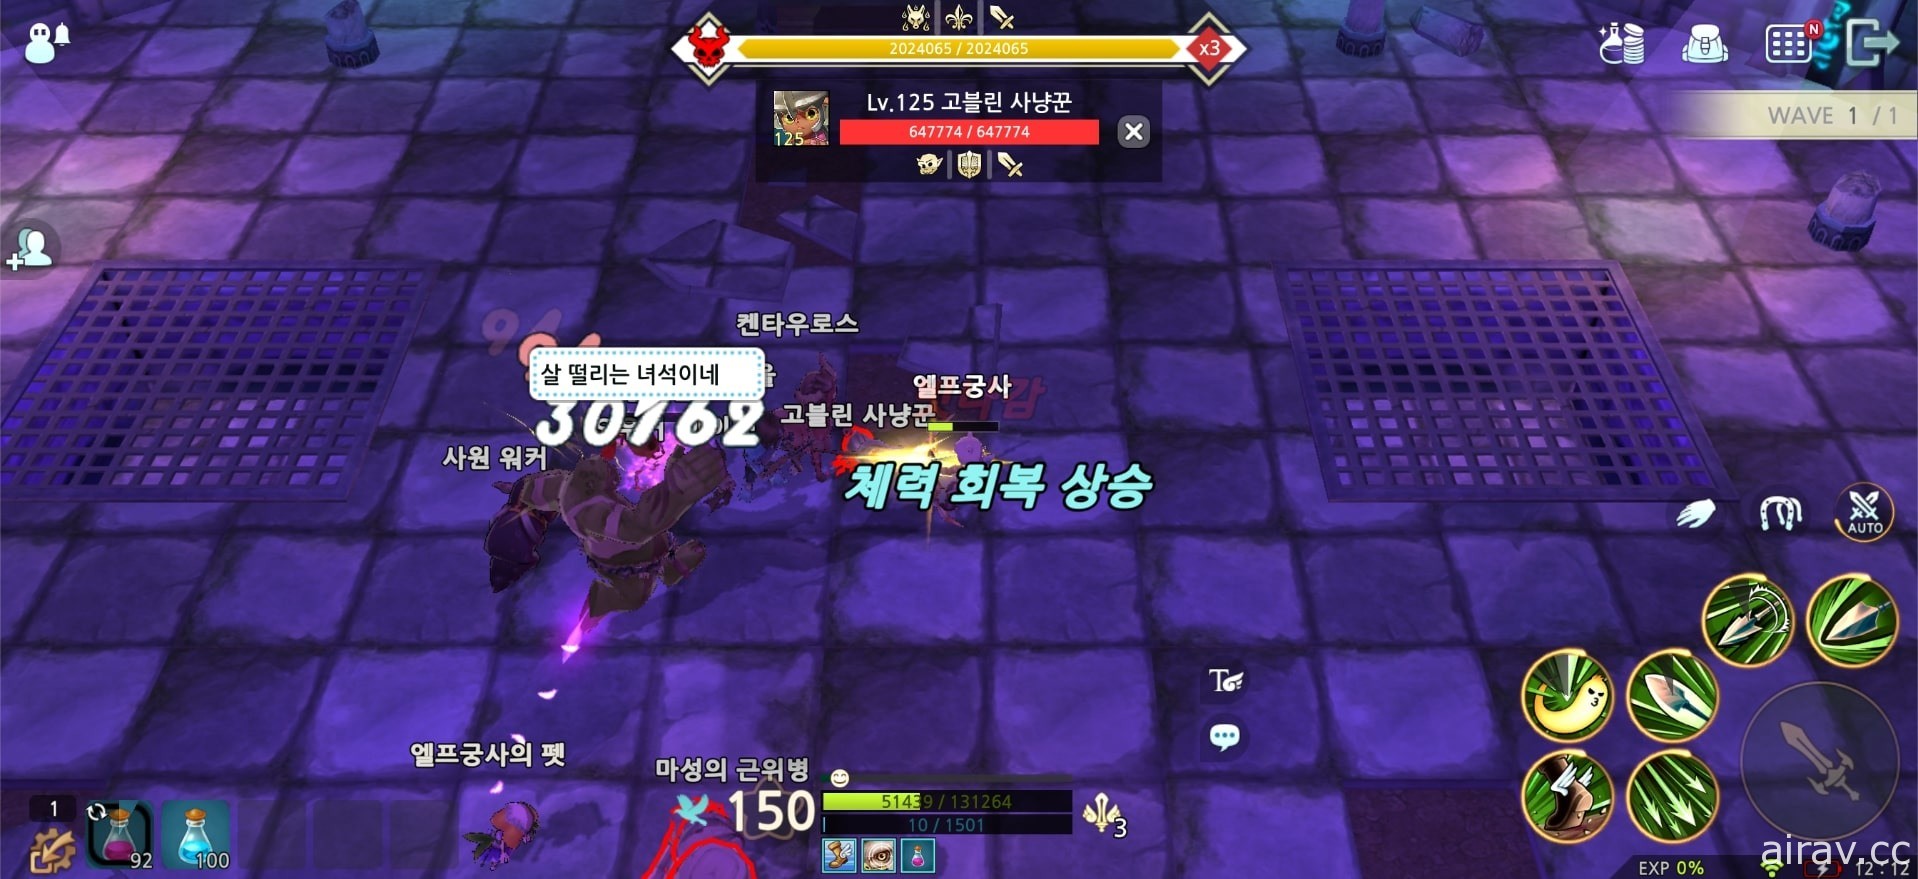 《LUNA Online》改編 MMORPG 新作《LUNA Mobile》於韓國展開 β 測試